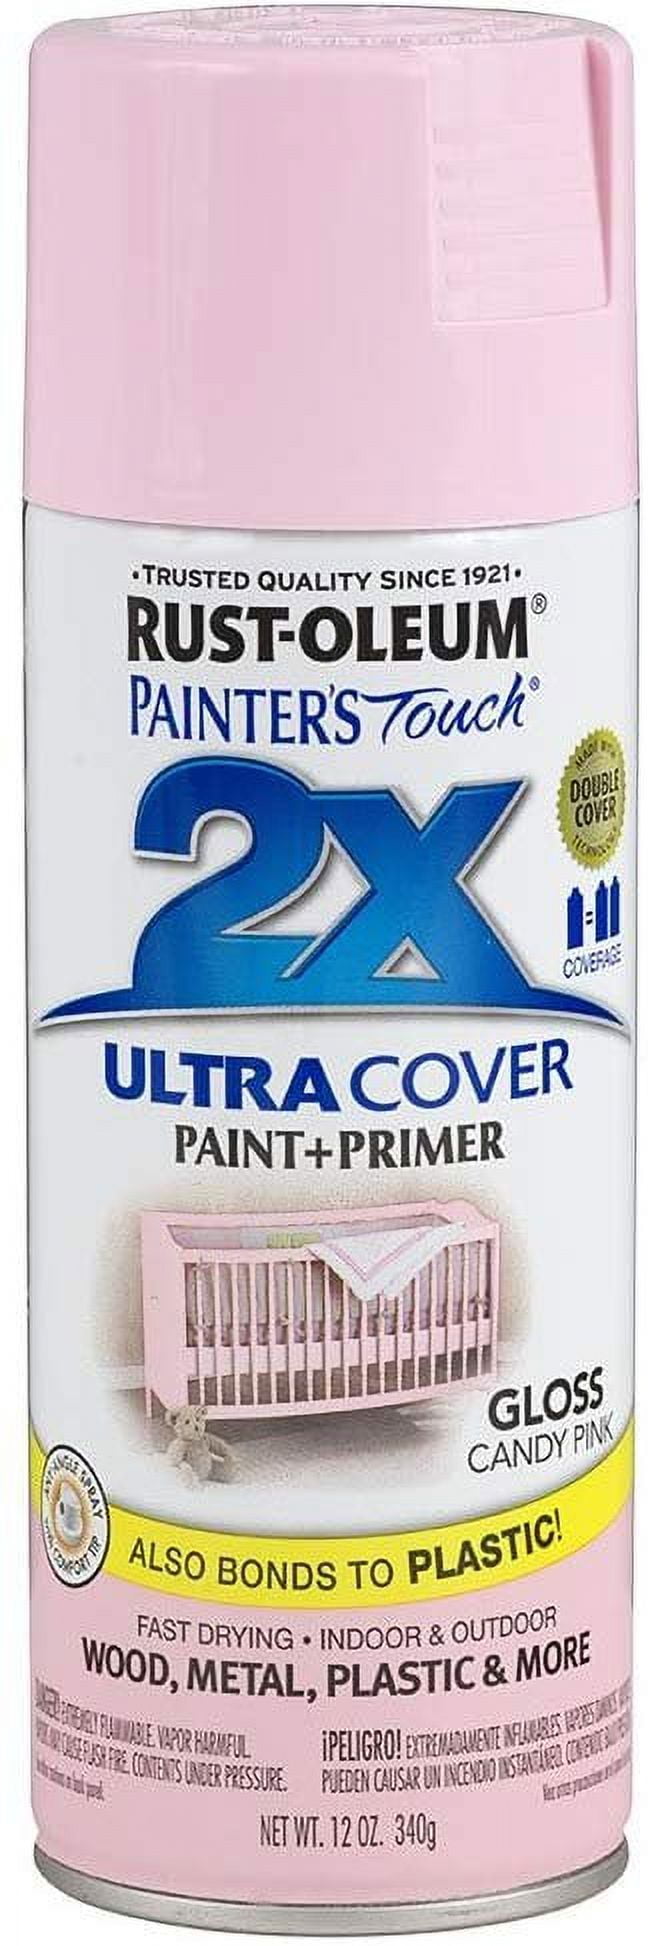 Rust-Oleum Painter's Touch 2x 12 oz. Flat Black General Purpose Spray Paint (6-pack)